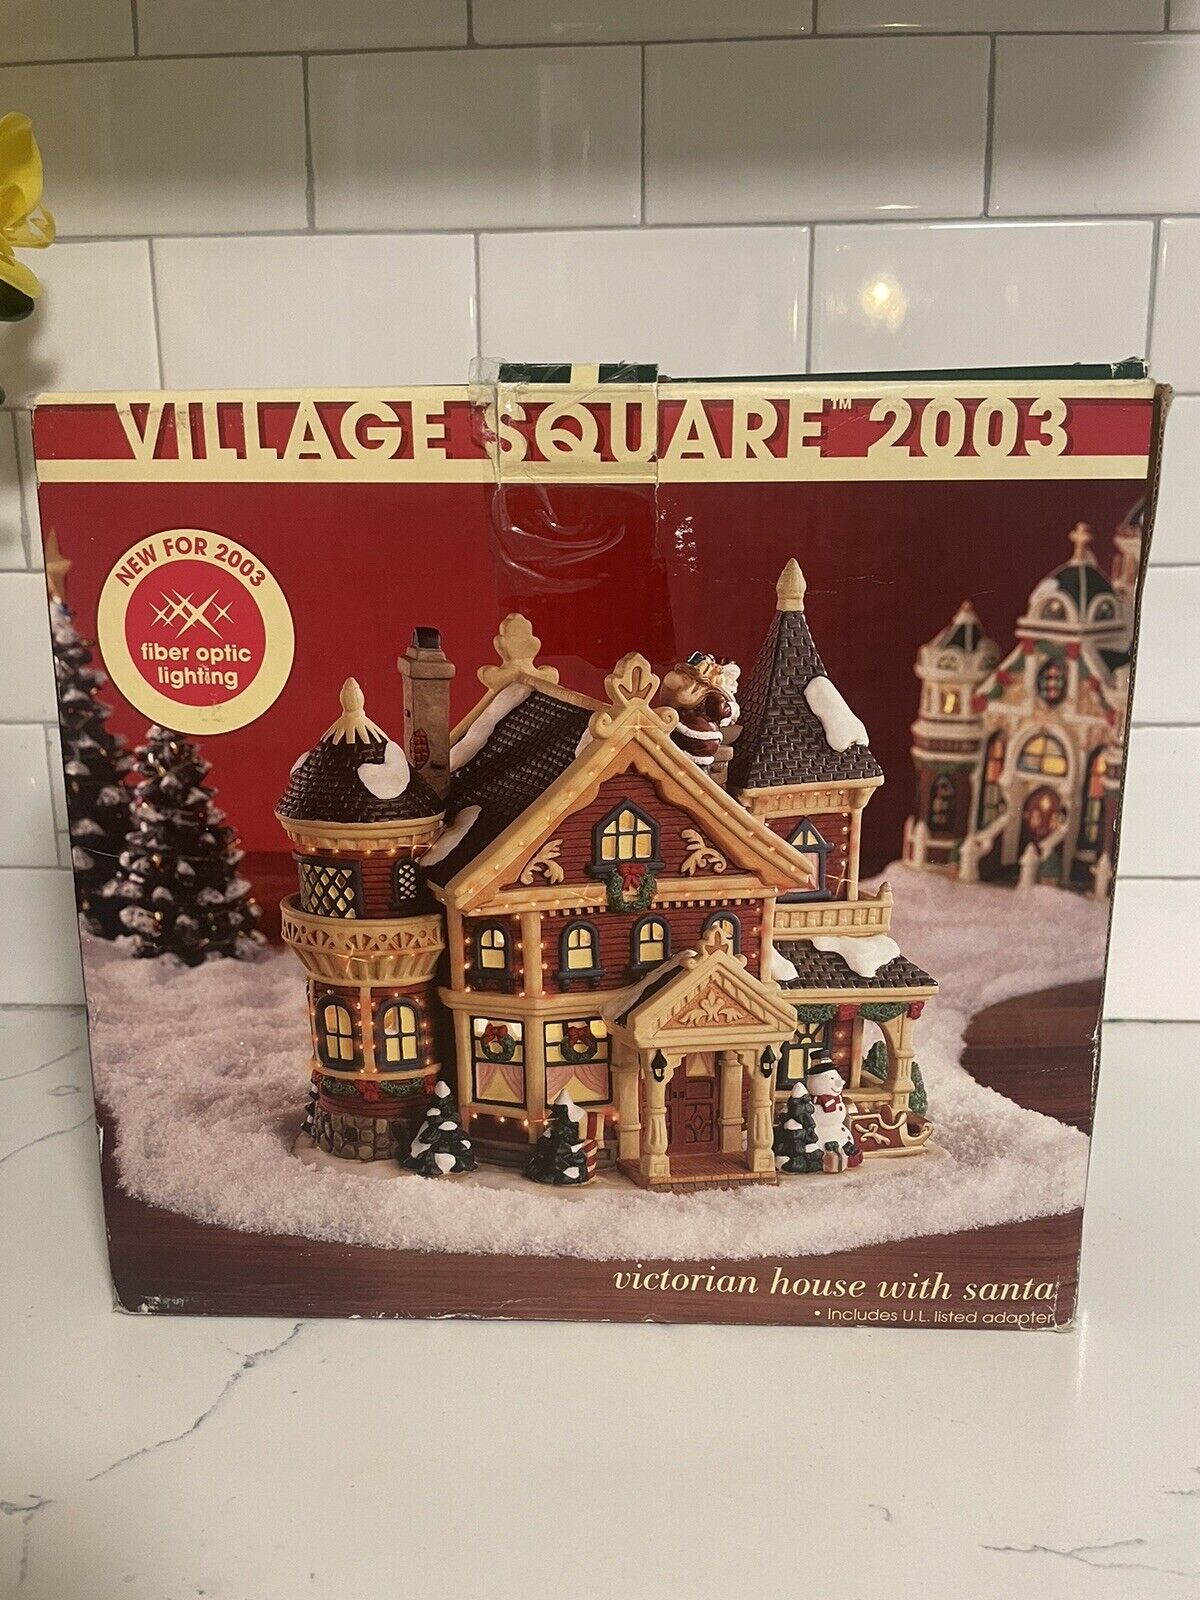 VTG 2003-Village Square- Victorian house with Santa-Fiber optic Lighting-TESTED